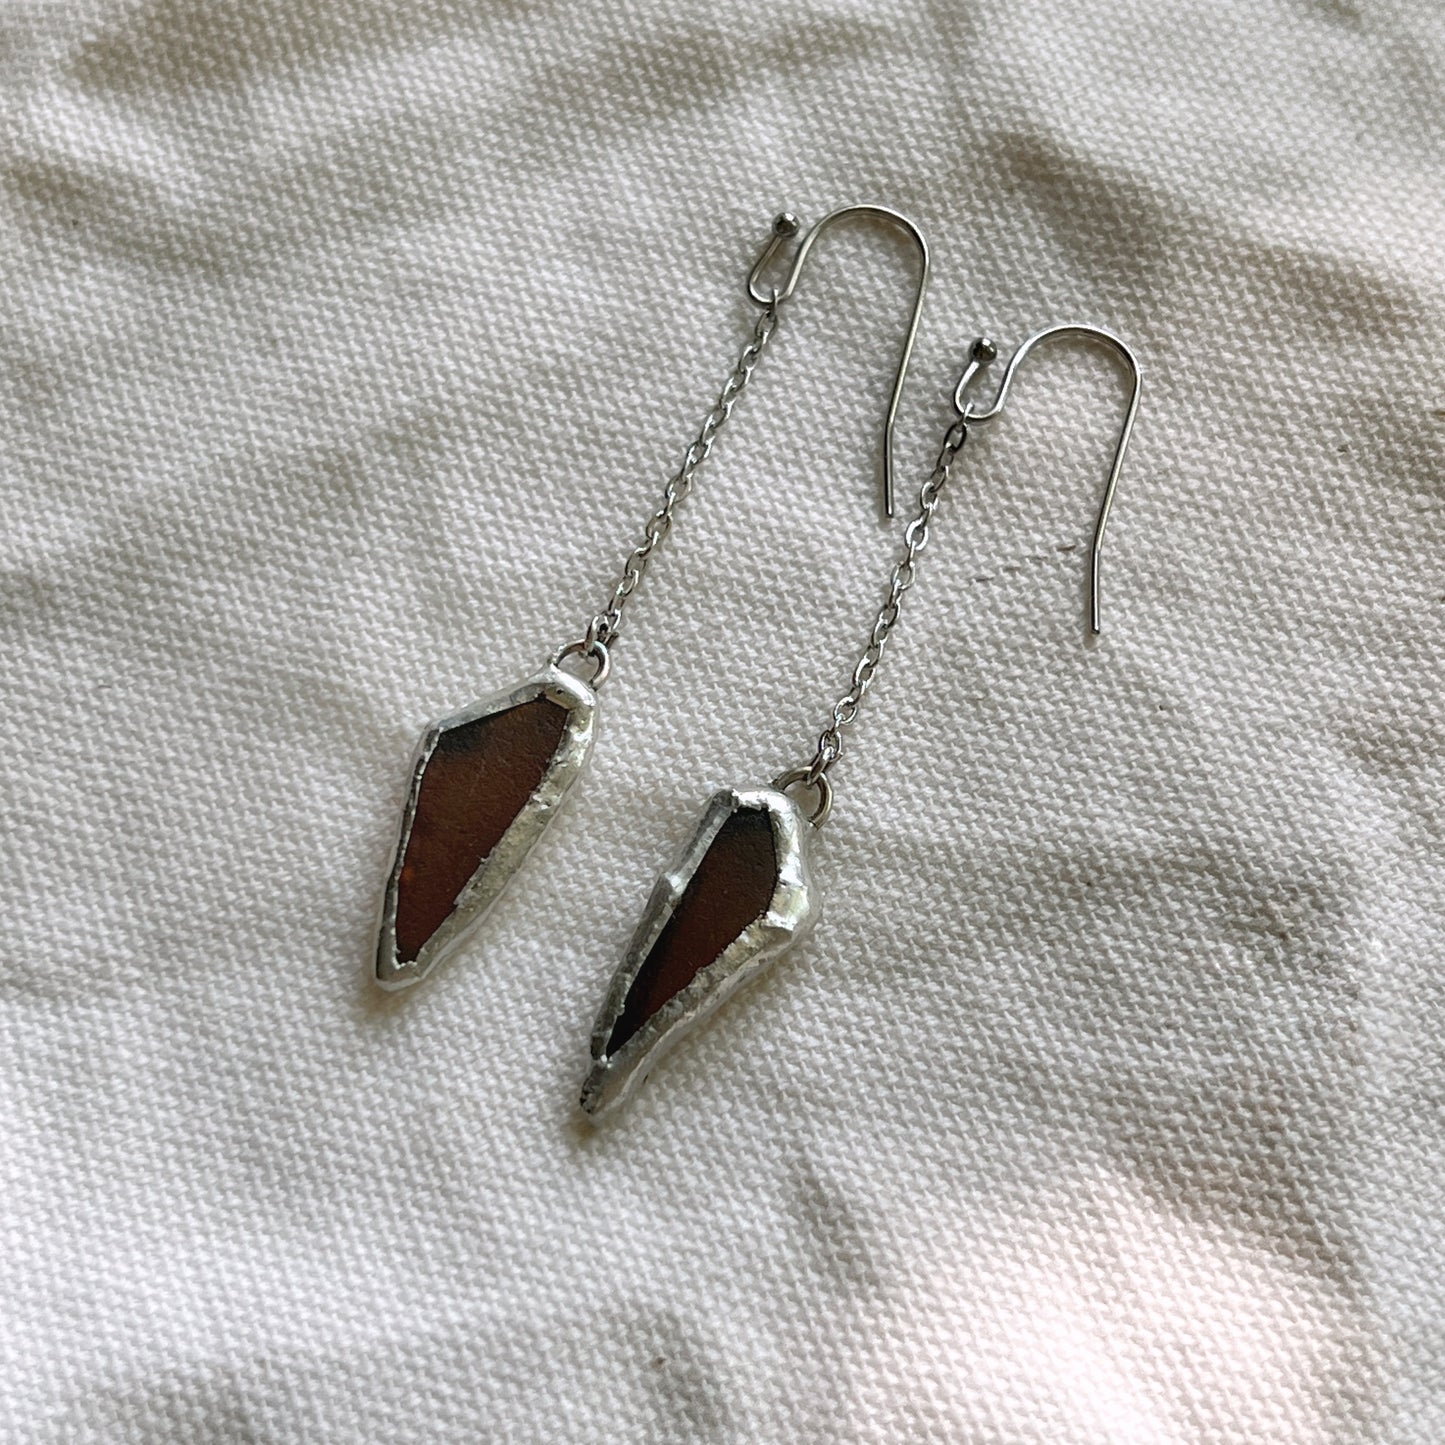 Chicago Beach Glass Earrings (Brown Drops)